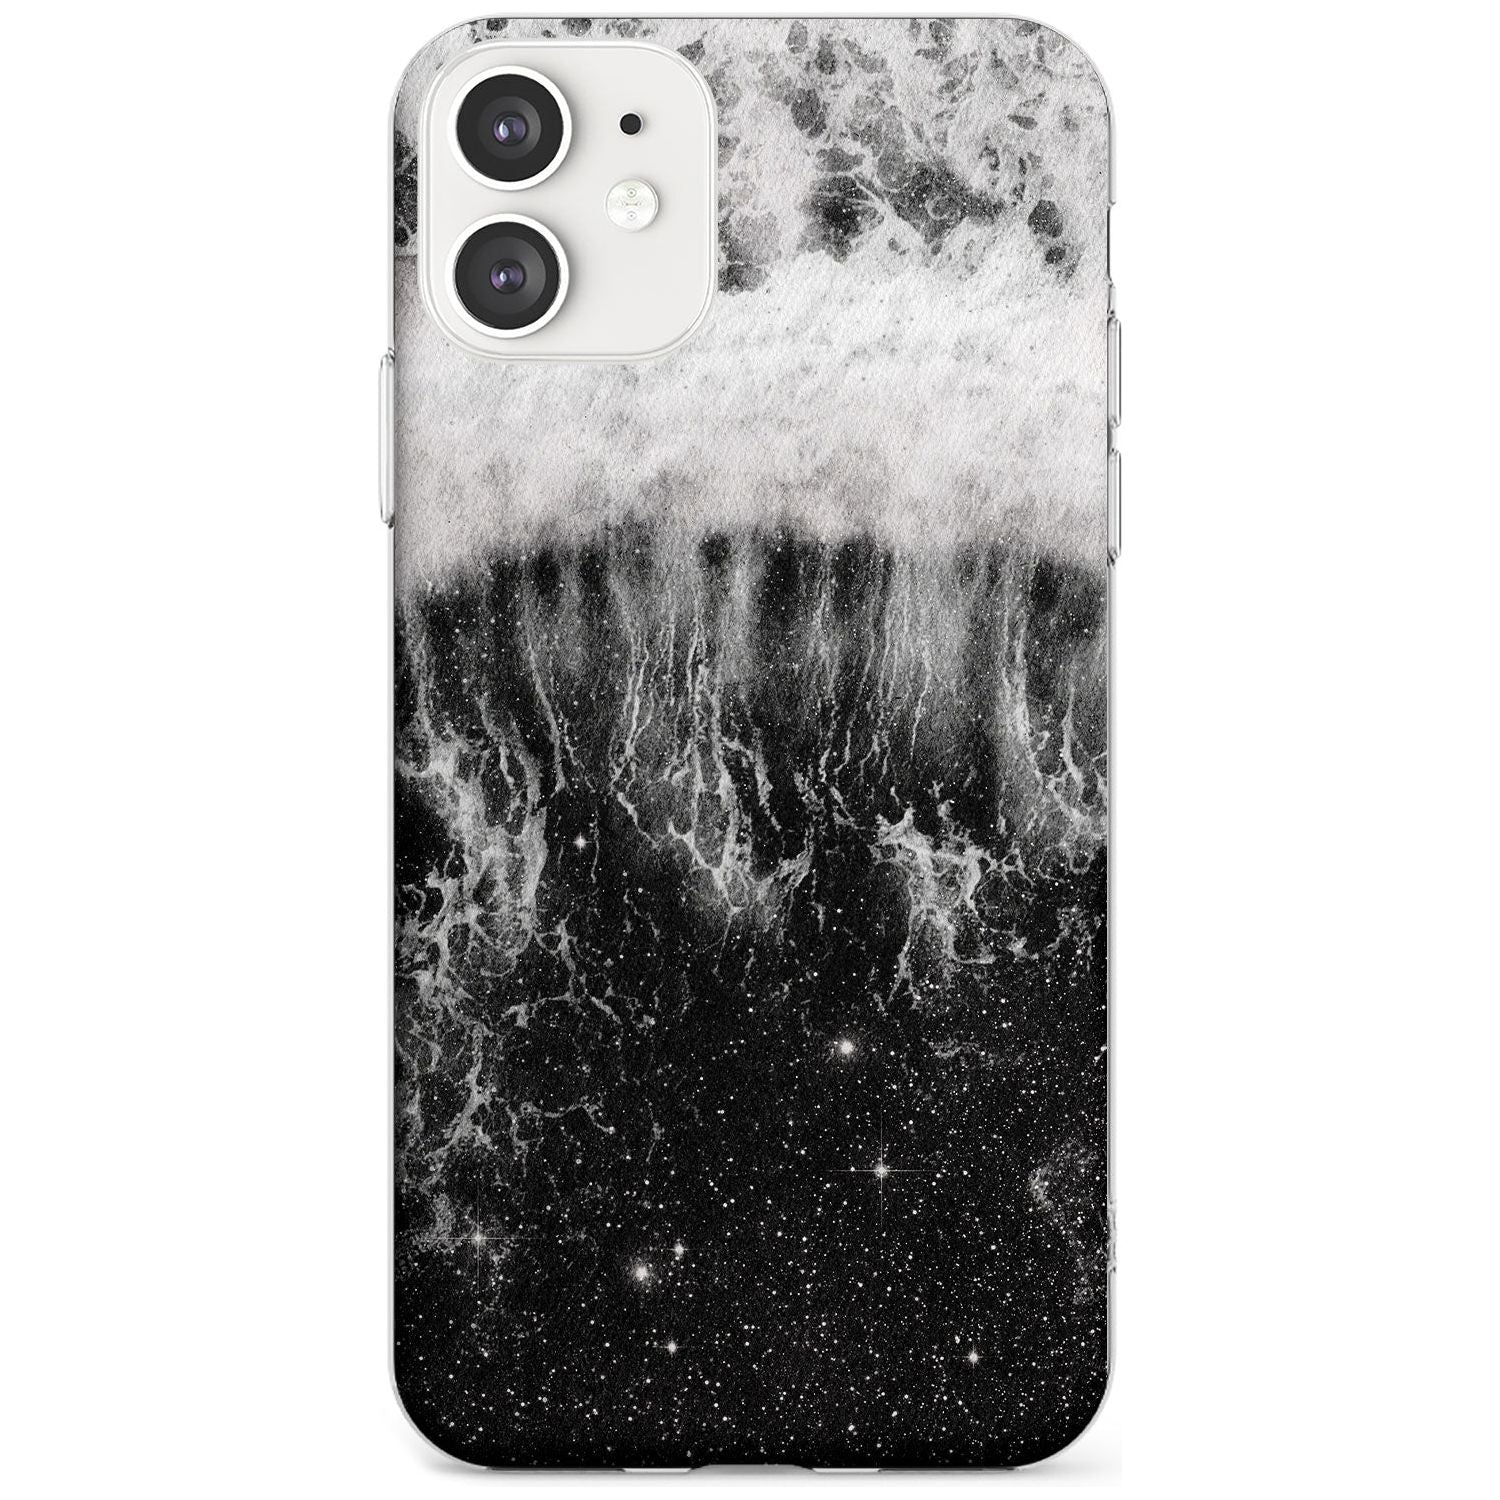 Ocean Wave Galaxy Print Slim TPU Phone Case for iPhone 11